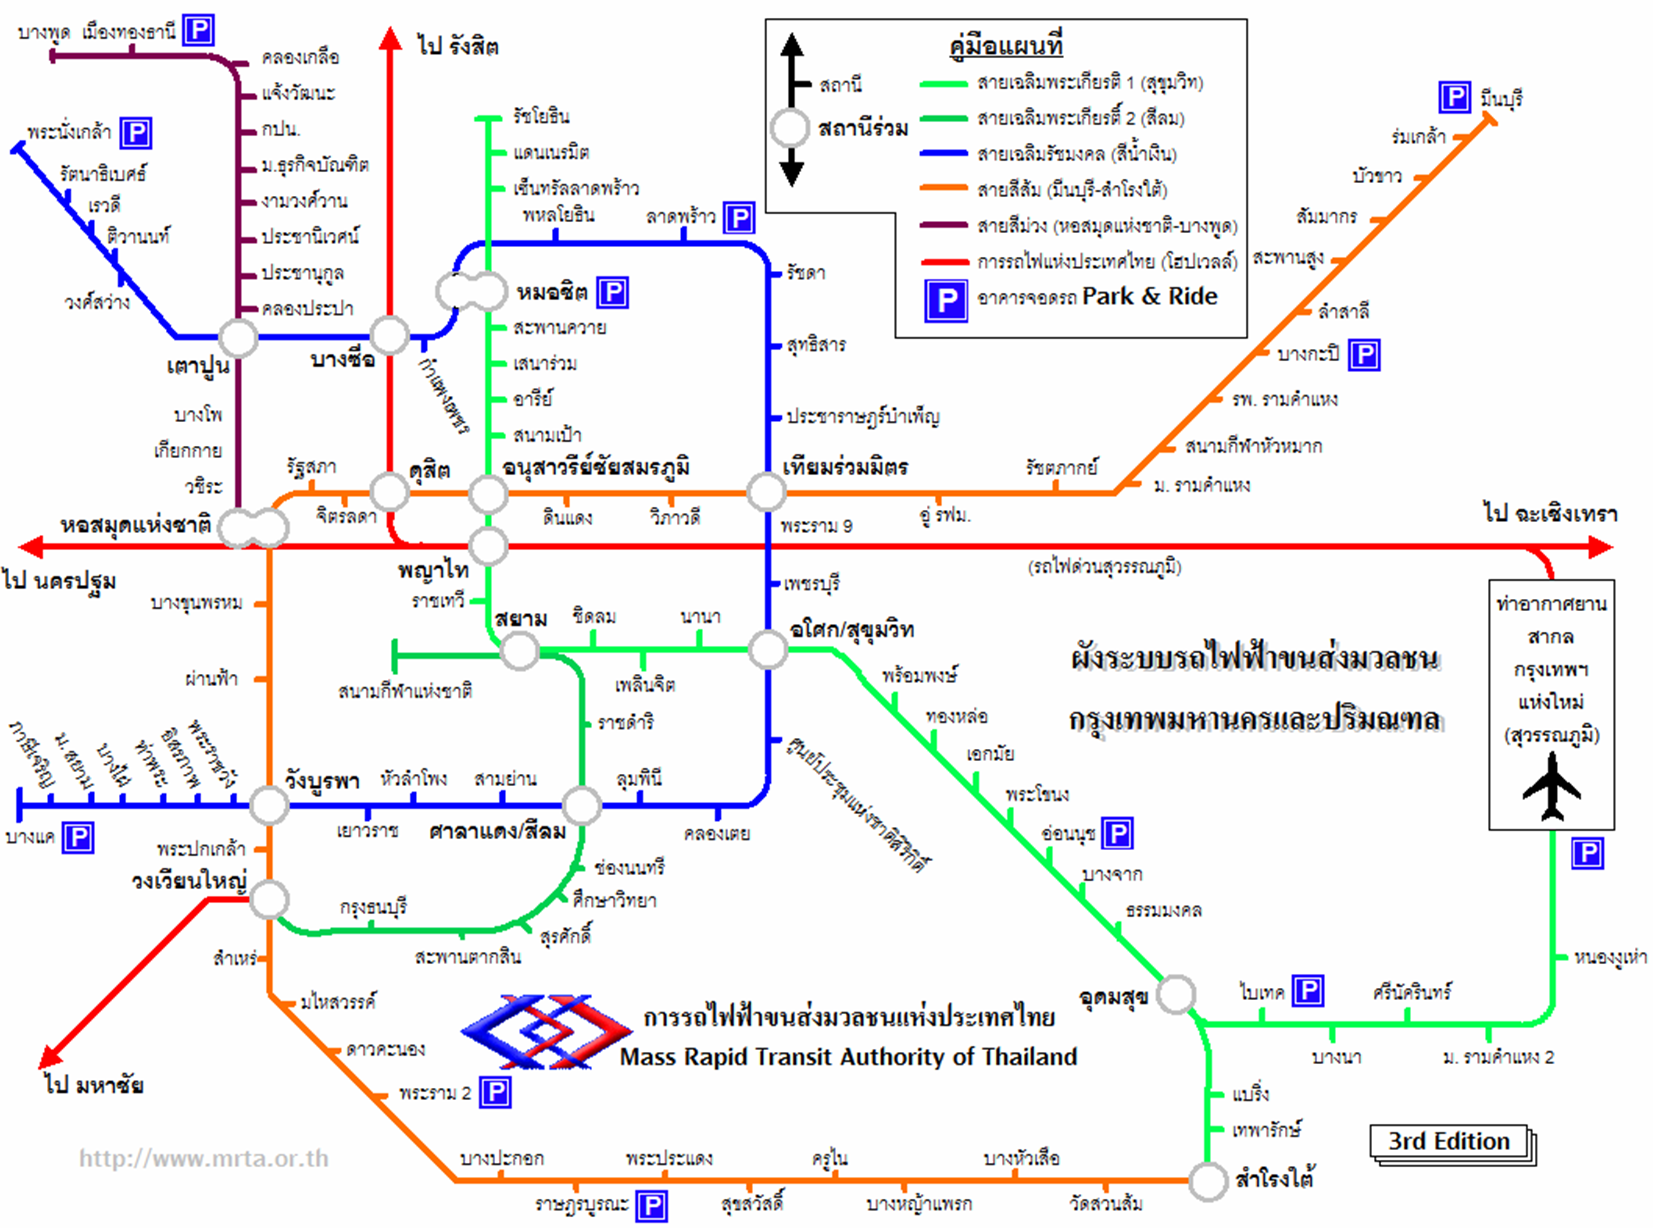 MRT Map Of Bangkok